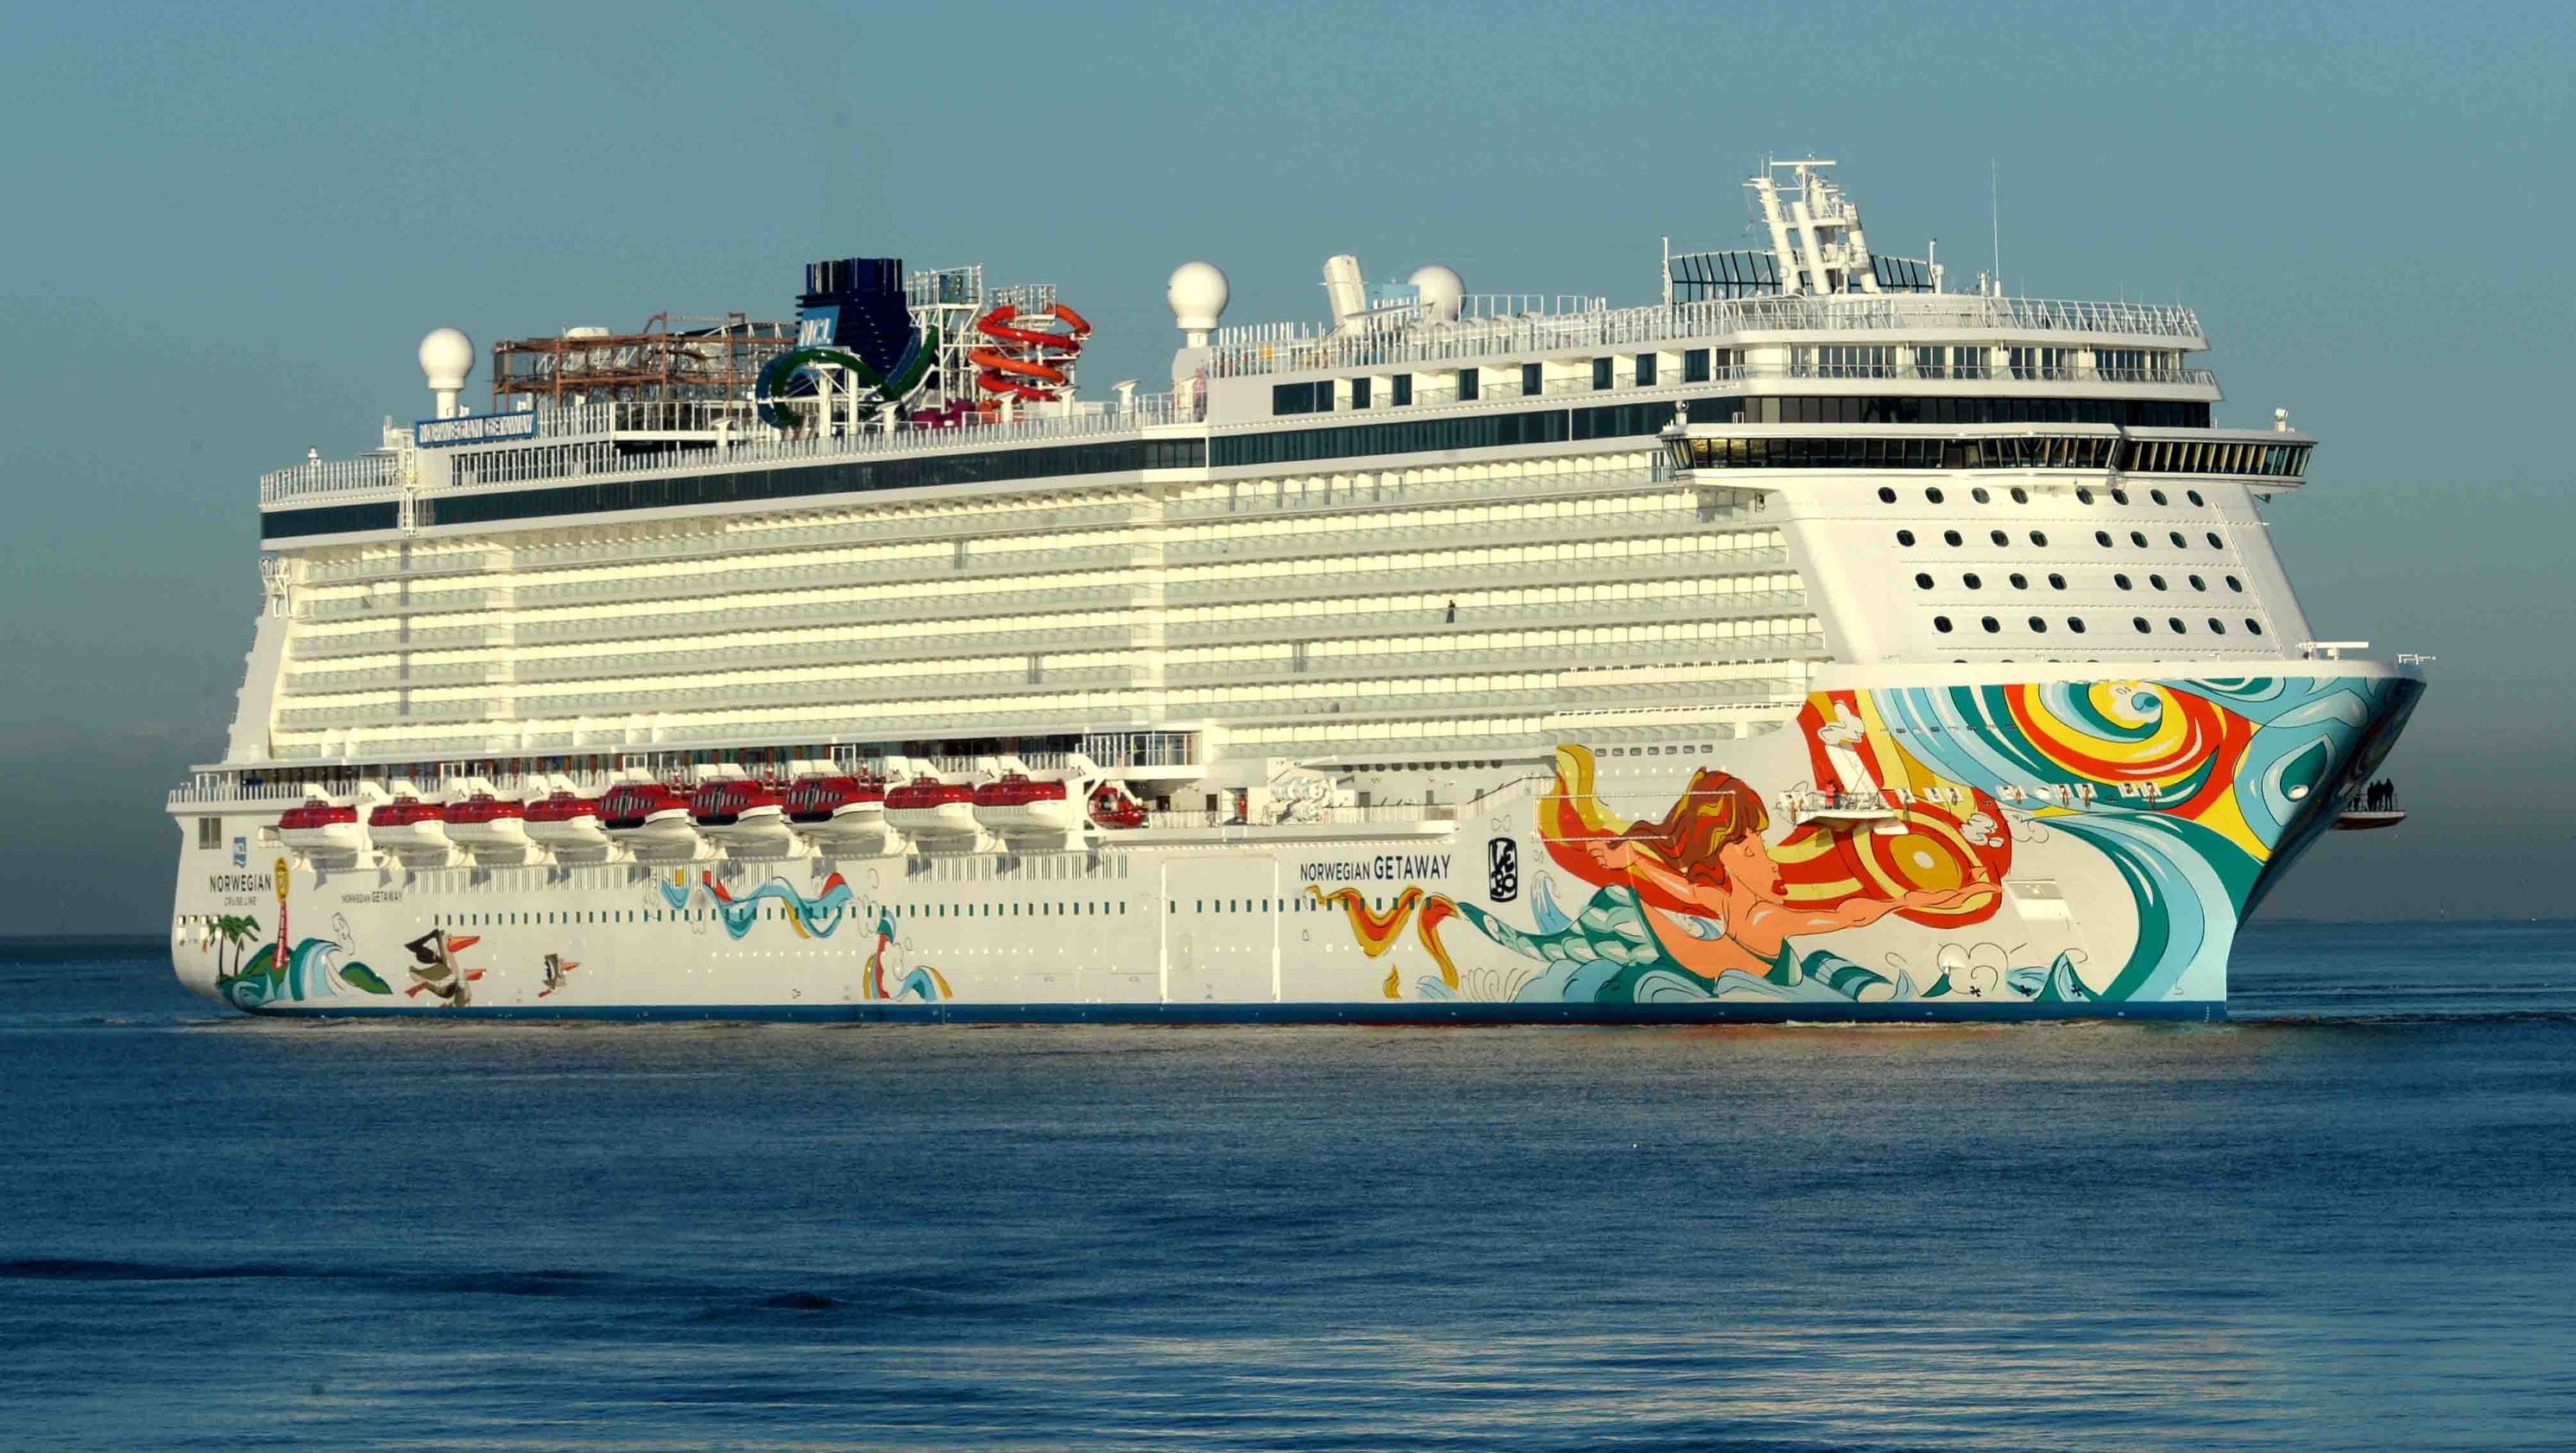 pictures of norwegian getaway cruise ship